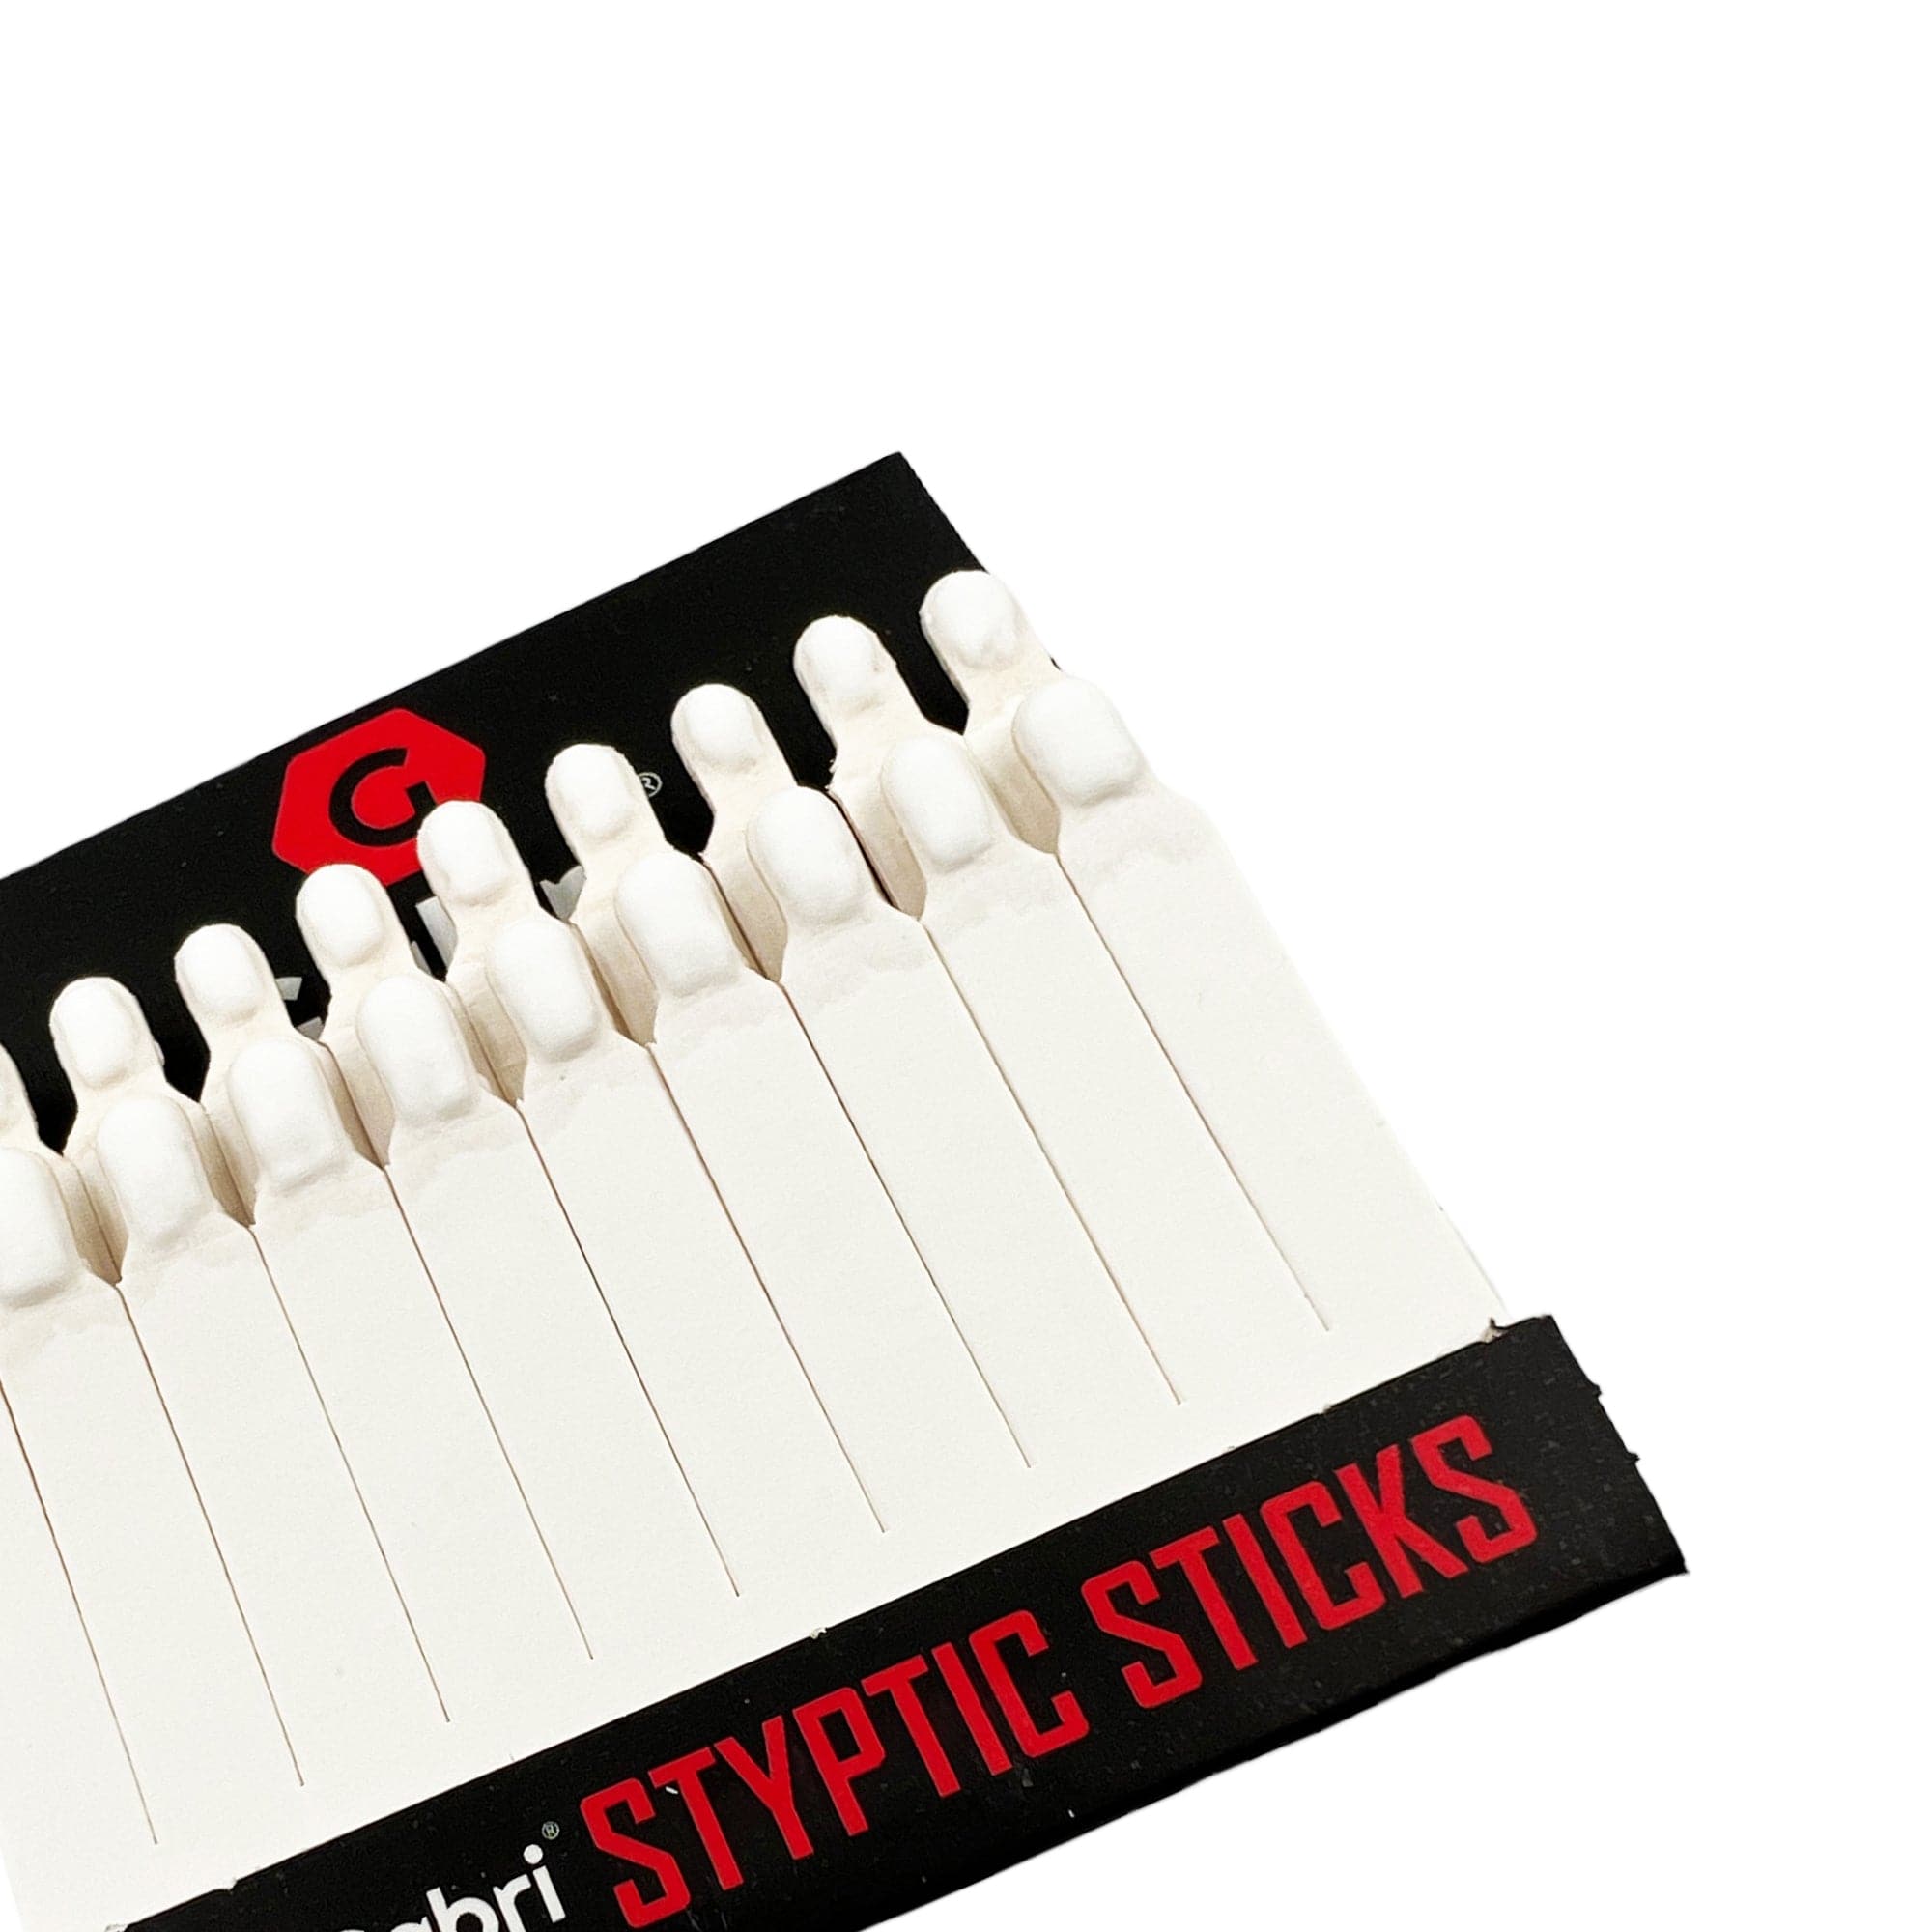 Gabri - Styptic Sticks After Shave Blood Stopper 20pcs